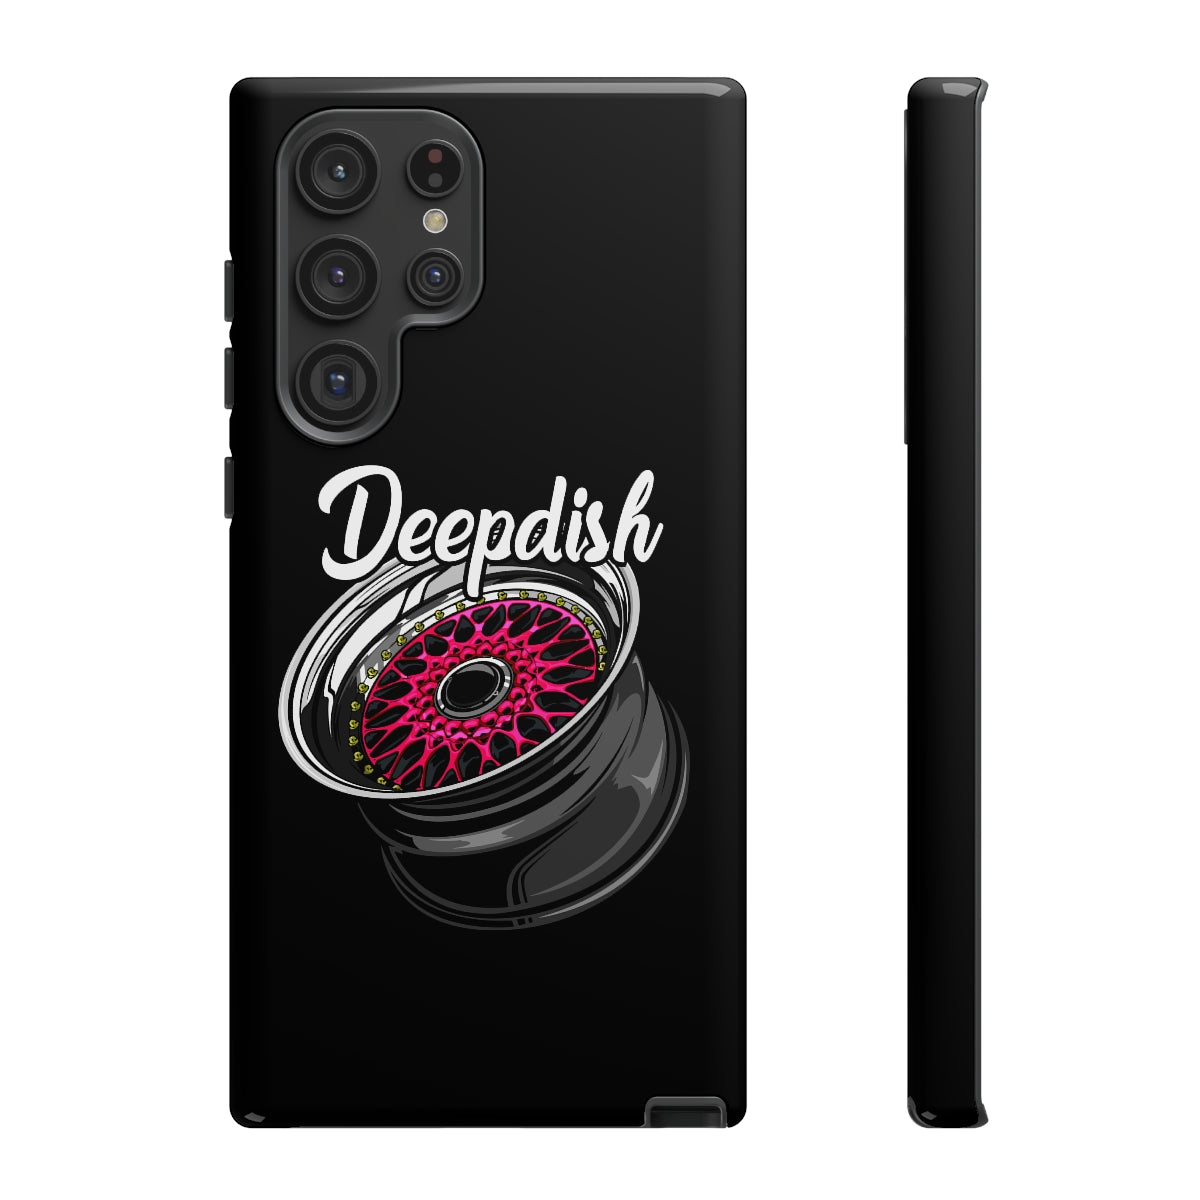 Deep Dish - Car Phone Case - Samsung Galaxy S22 Ultra